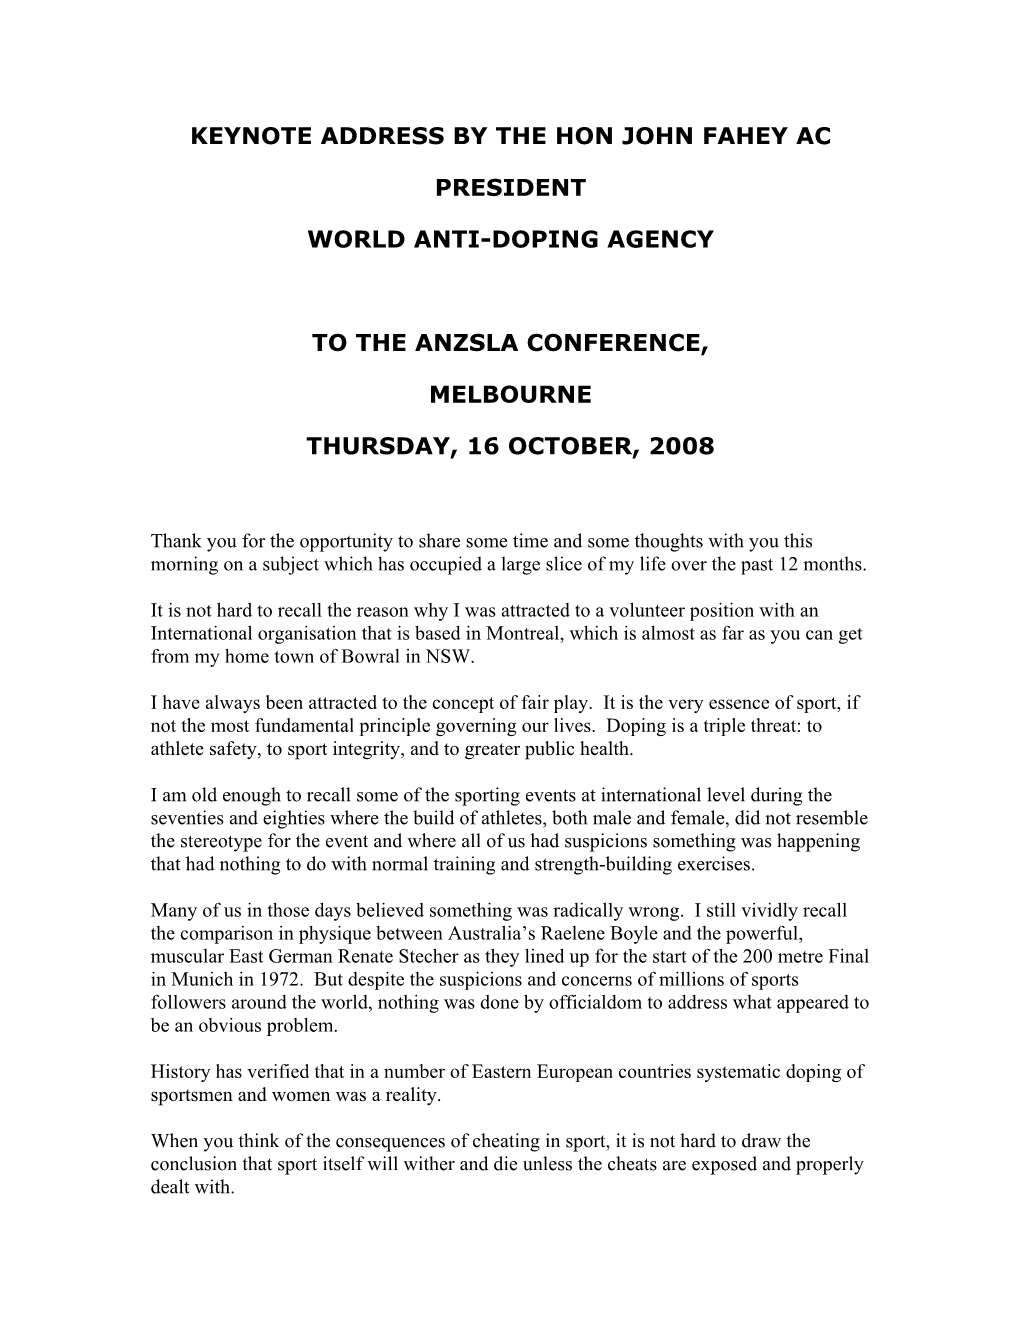 Keynote Address by the Hon John Fahey Ac President World Anti-Doping Agency to the Anzsla Conference, Melbourne Thursday, 16